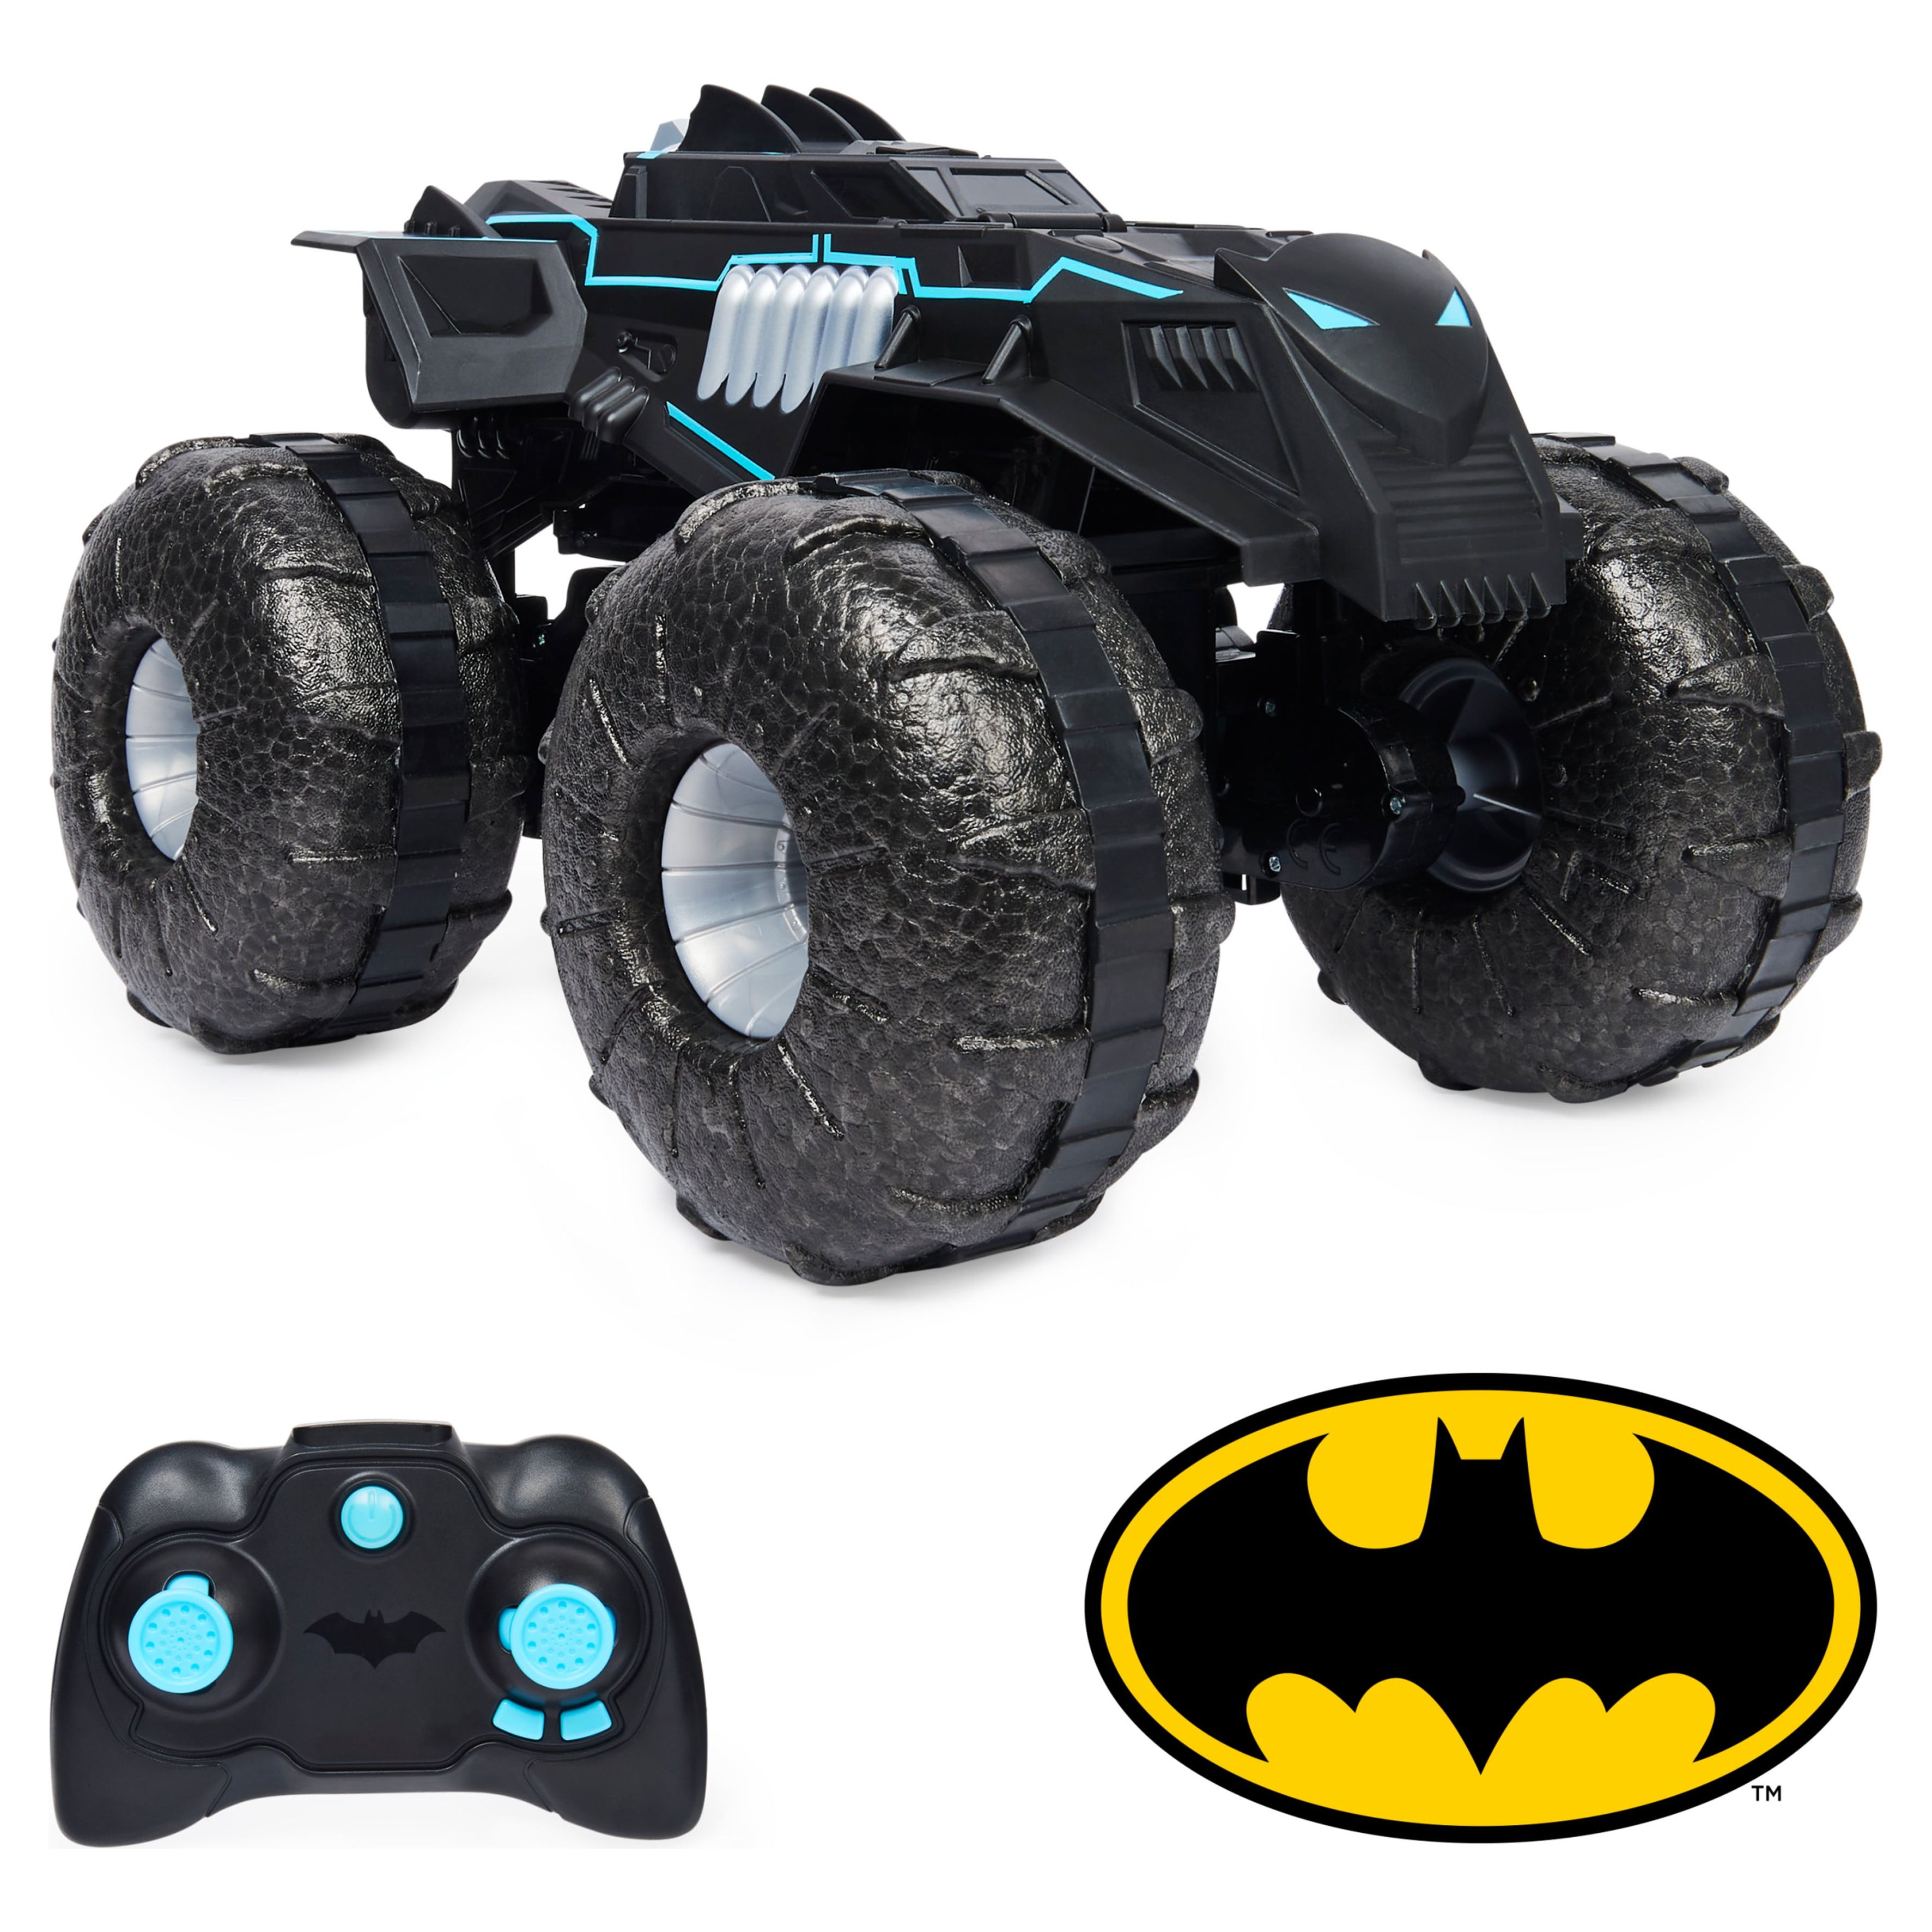 Batman, All-Terrain Batmobile Remote Control Vehicle, Toys for Boys - image 1 of 9